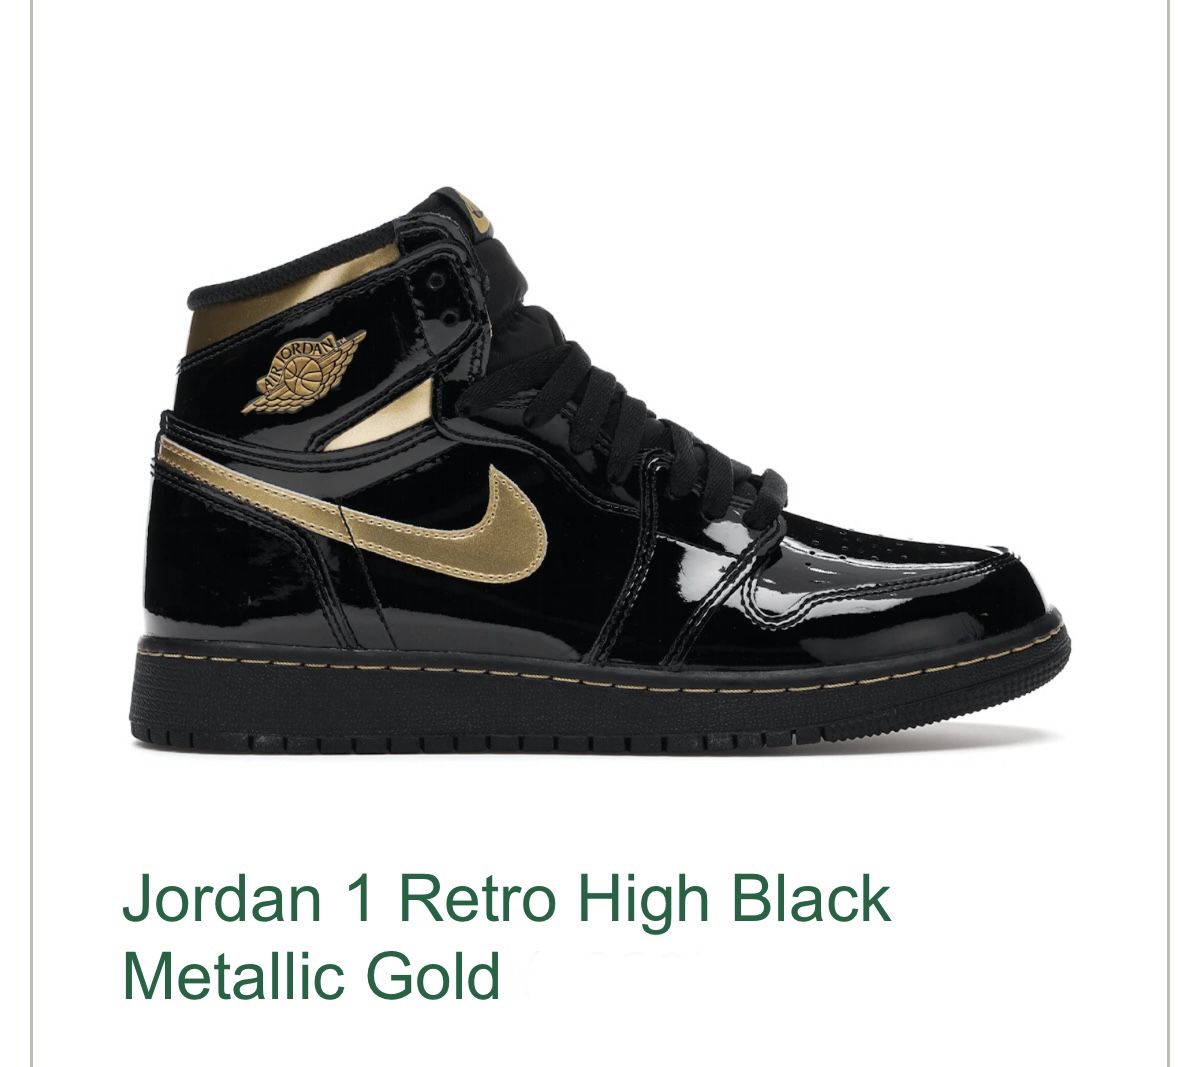 Brand/Model: Jordan 1 Retro High; Color: Black Metallic Gold; Size: US 6.5Y; Condition: New